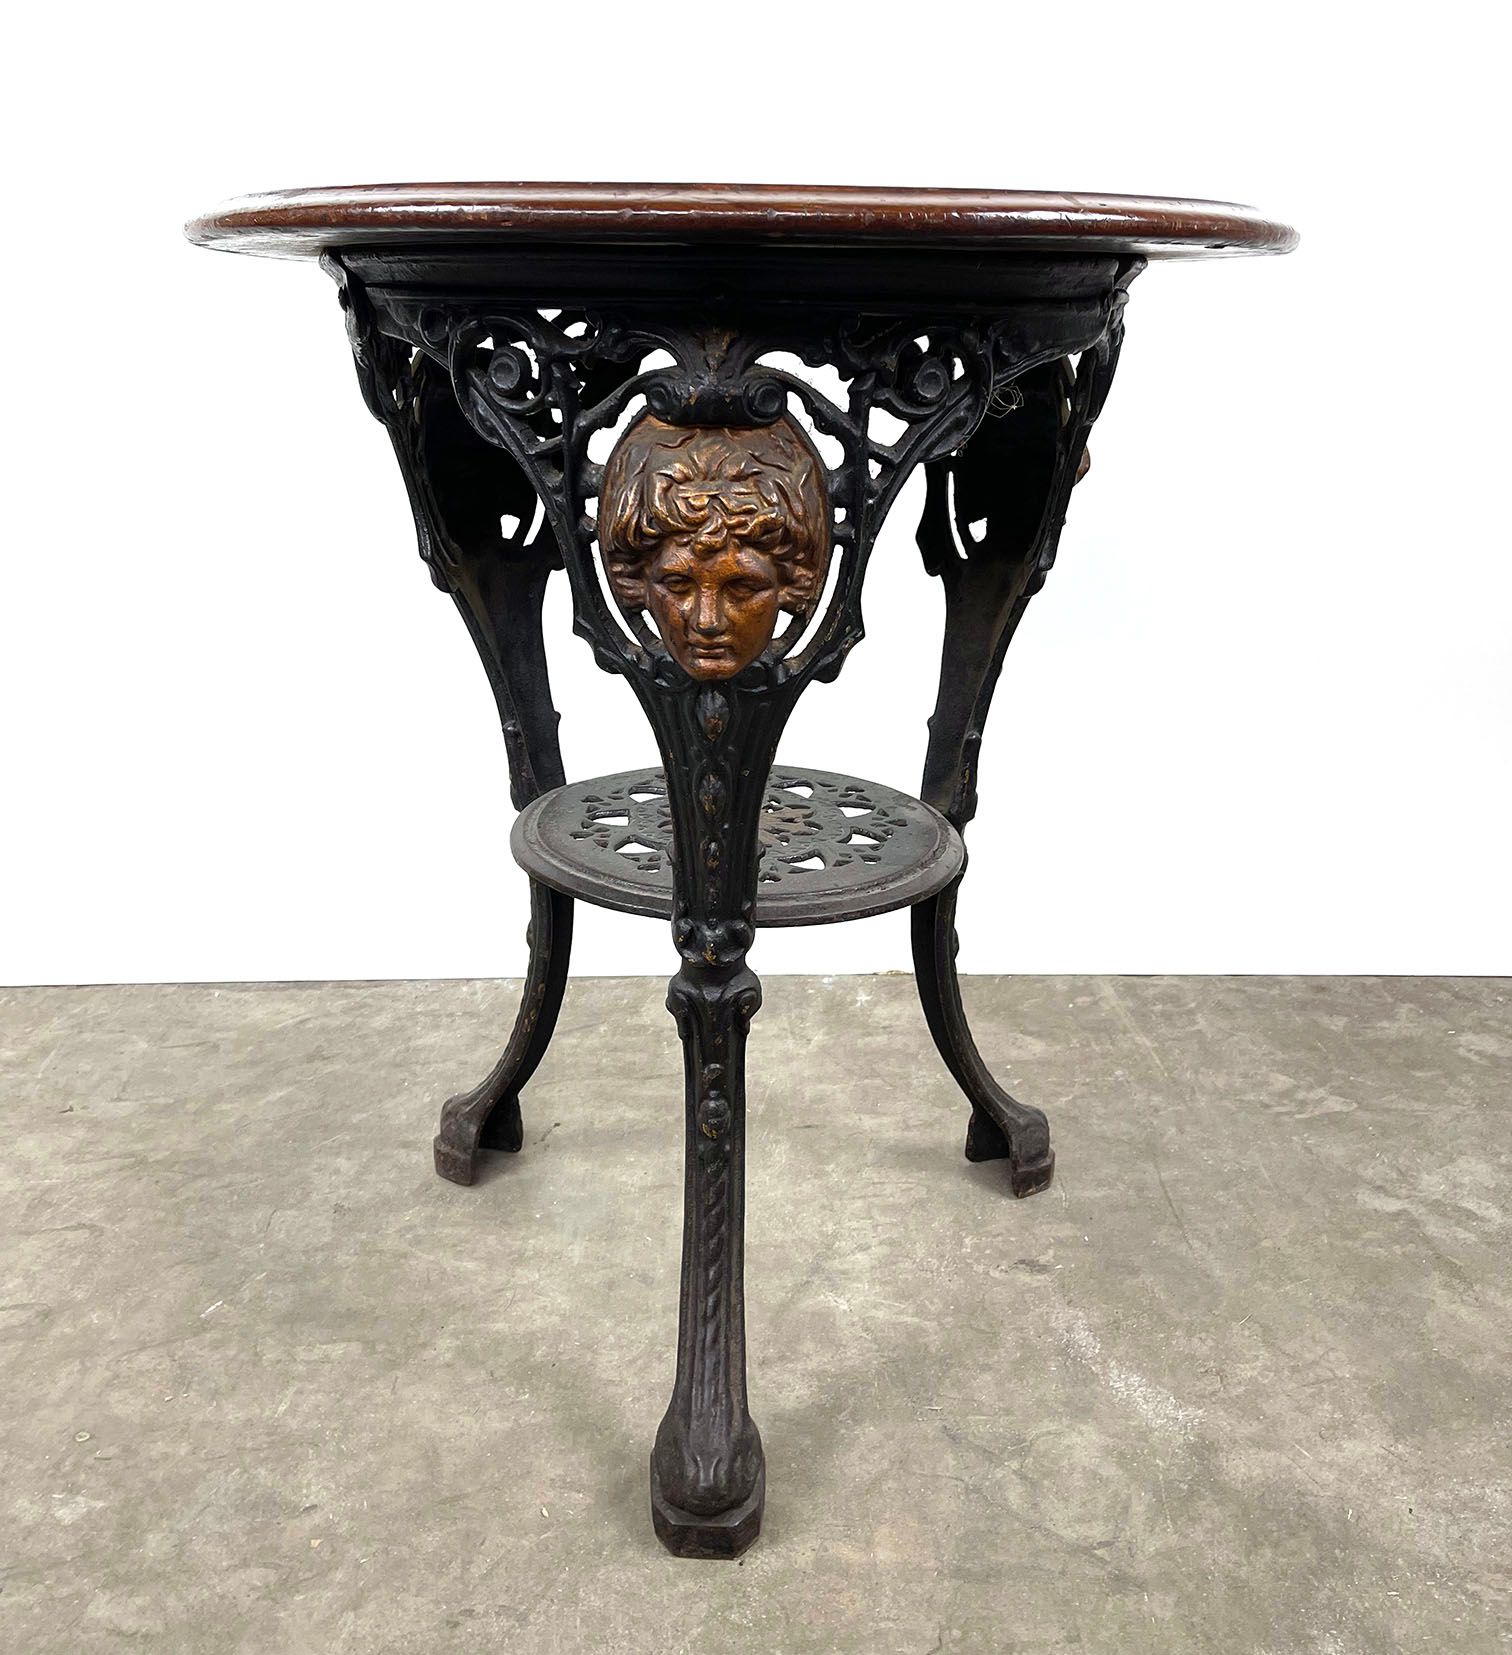 Vintage Round 3 Legged English Pub Table 复古的圆形三腿英式酒吧桌，木制桌面和铸铁底座。木质桌面和黑色和青铜色的铸铁底座&hellip;